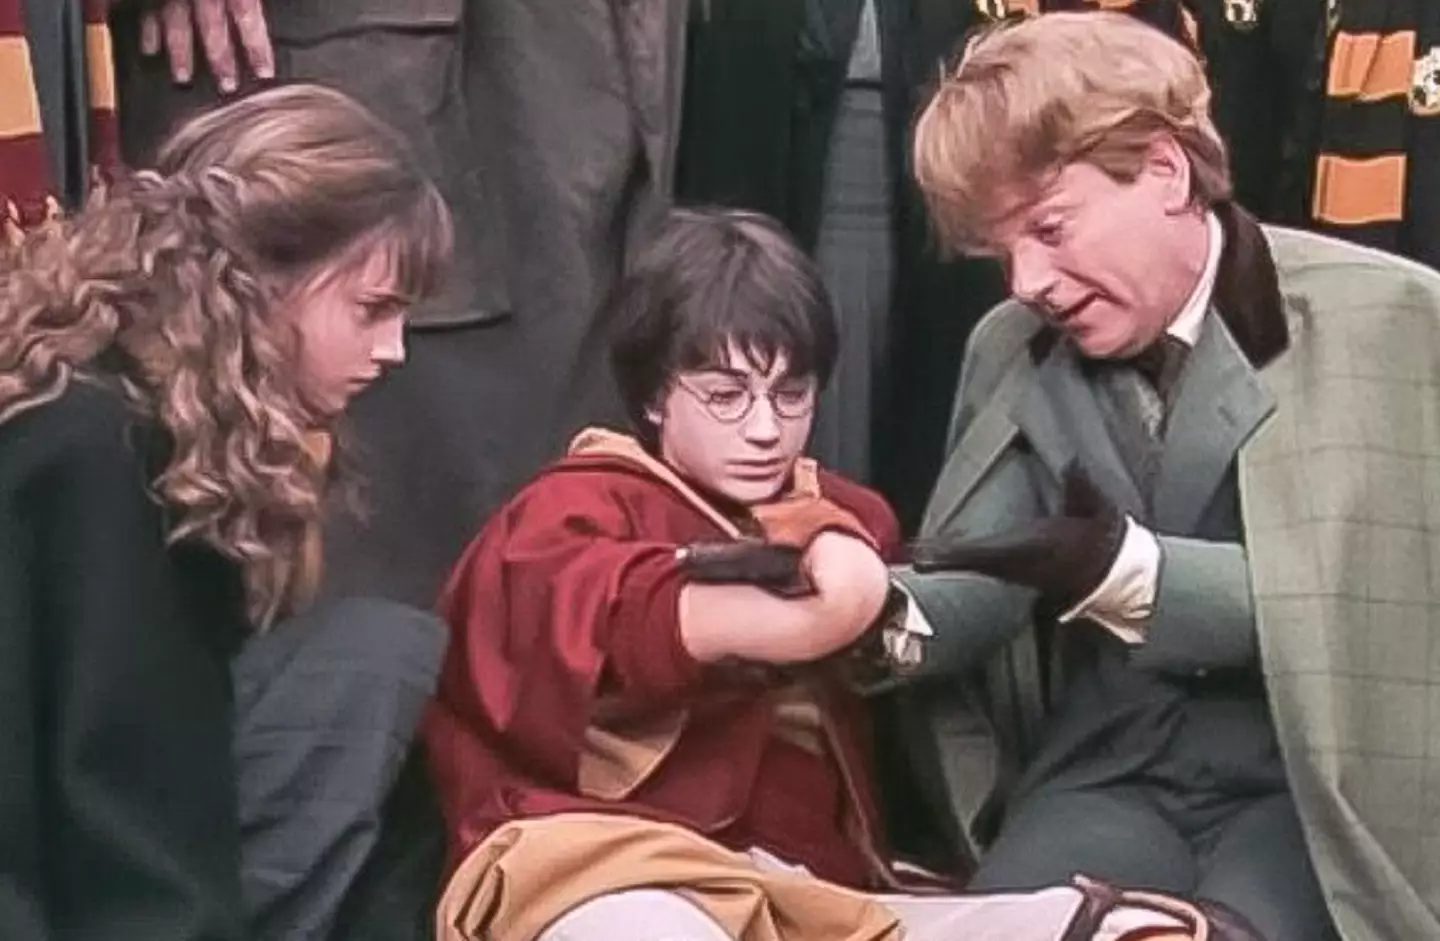 Jack likened his leg to the 'broken arm' scene in Harry Potter.